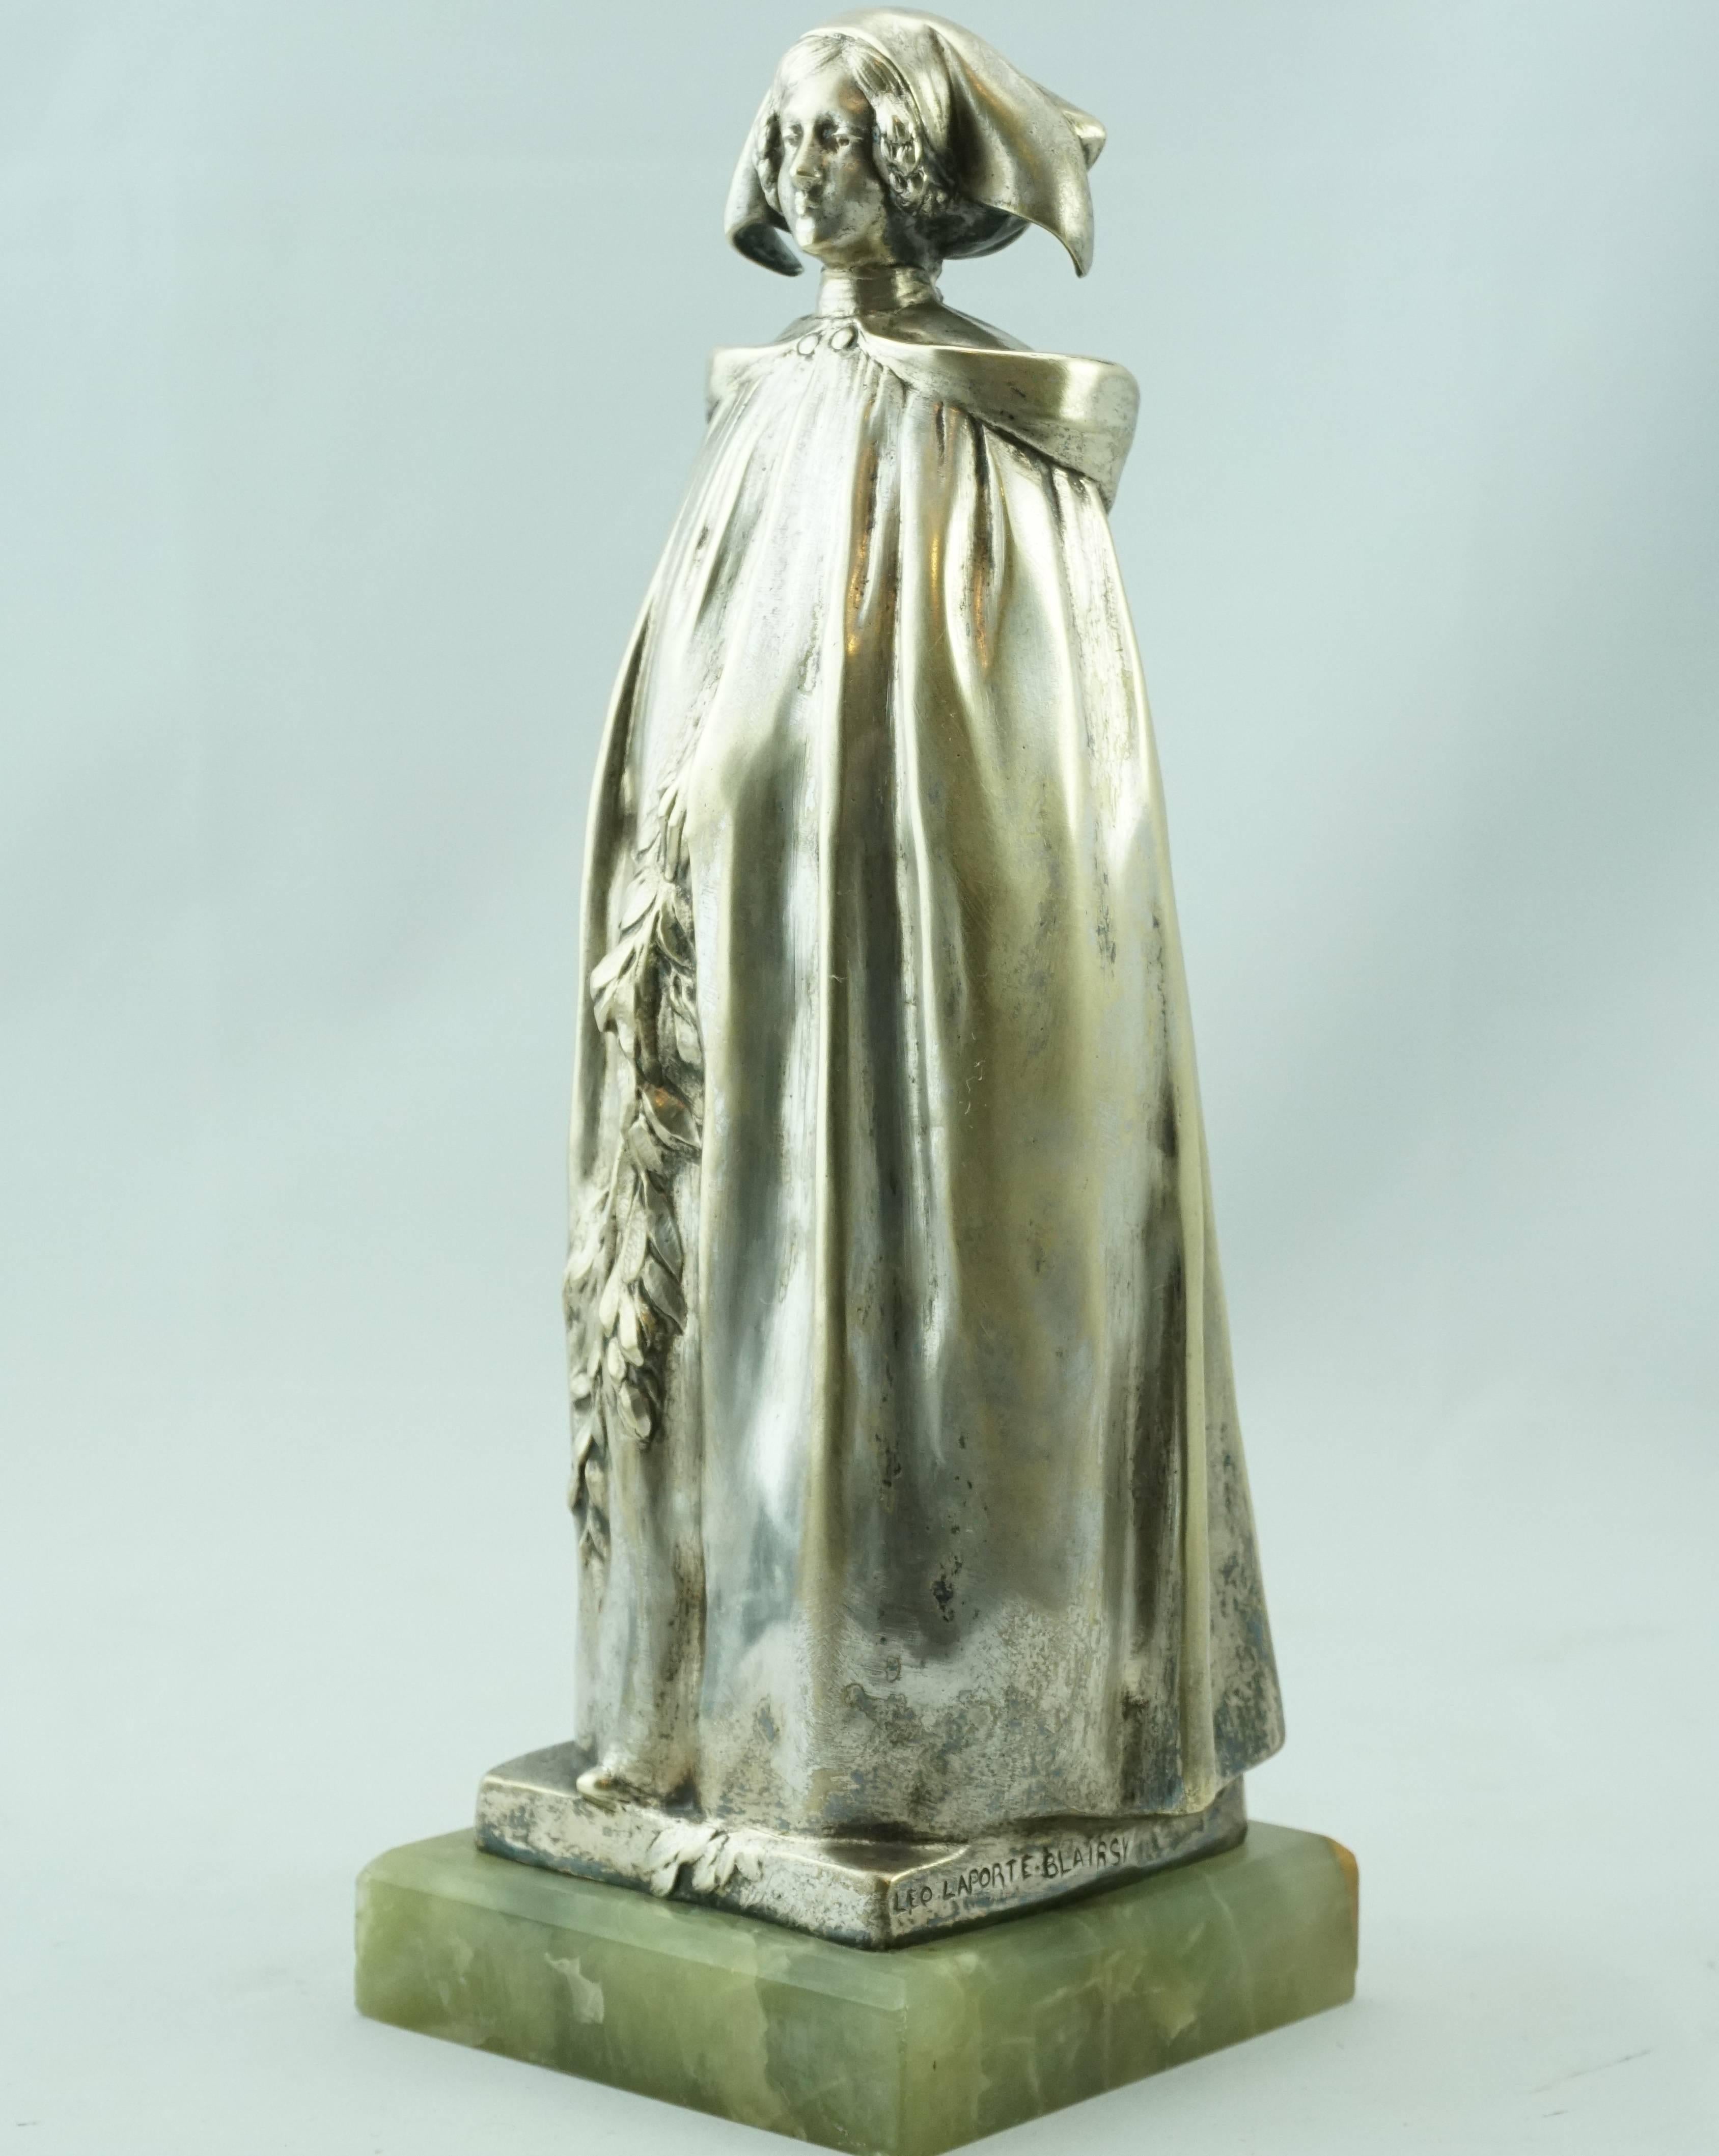 Leo Laporte Blairsy Art Nouveau Silver Overlay Bronze, 1903 - Sculpture by Unknown